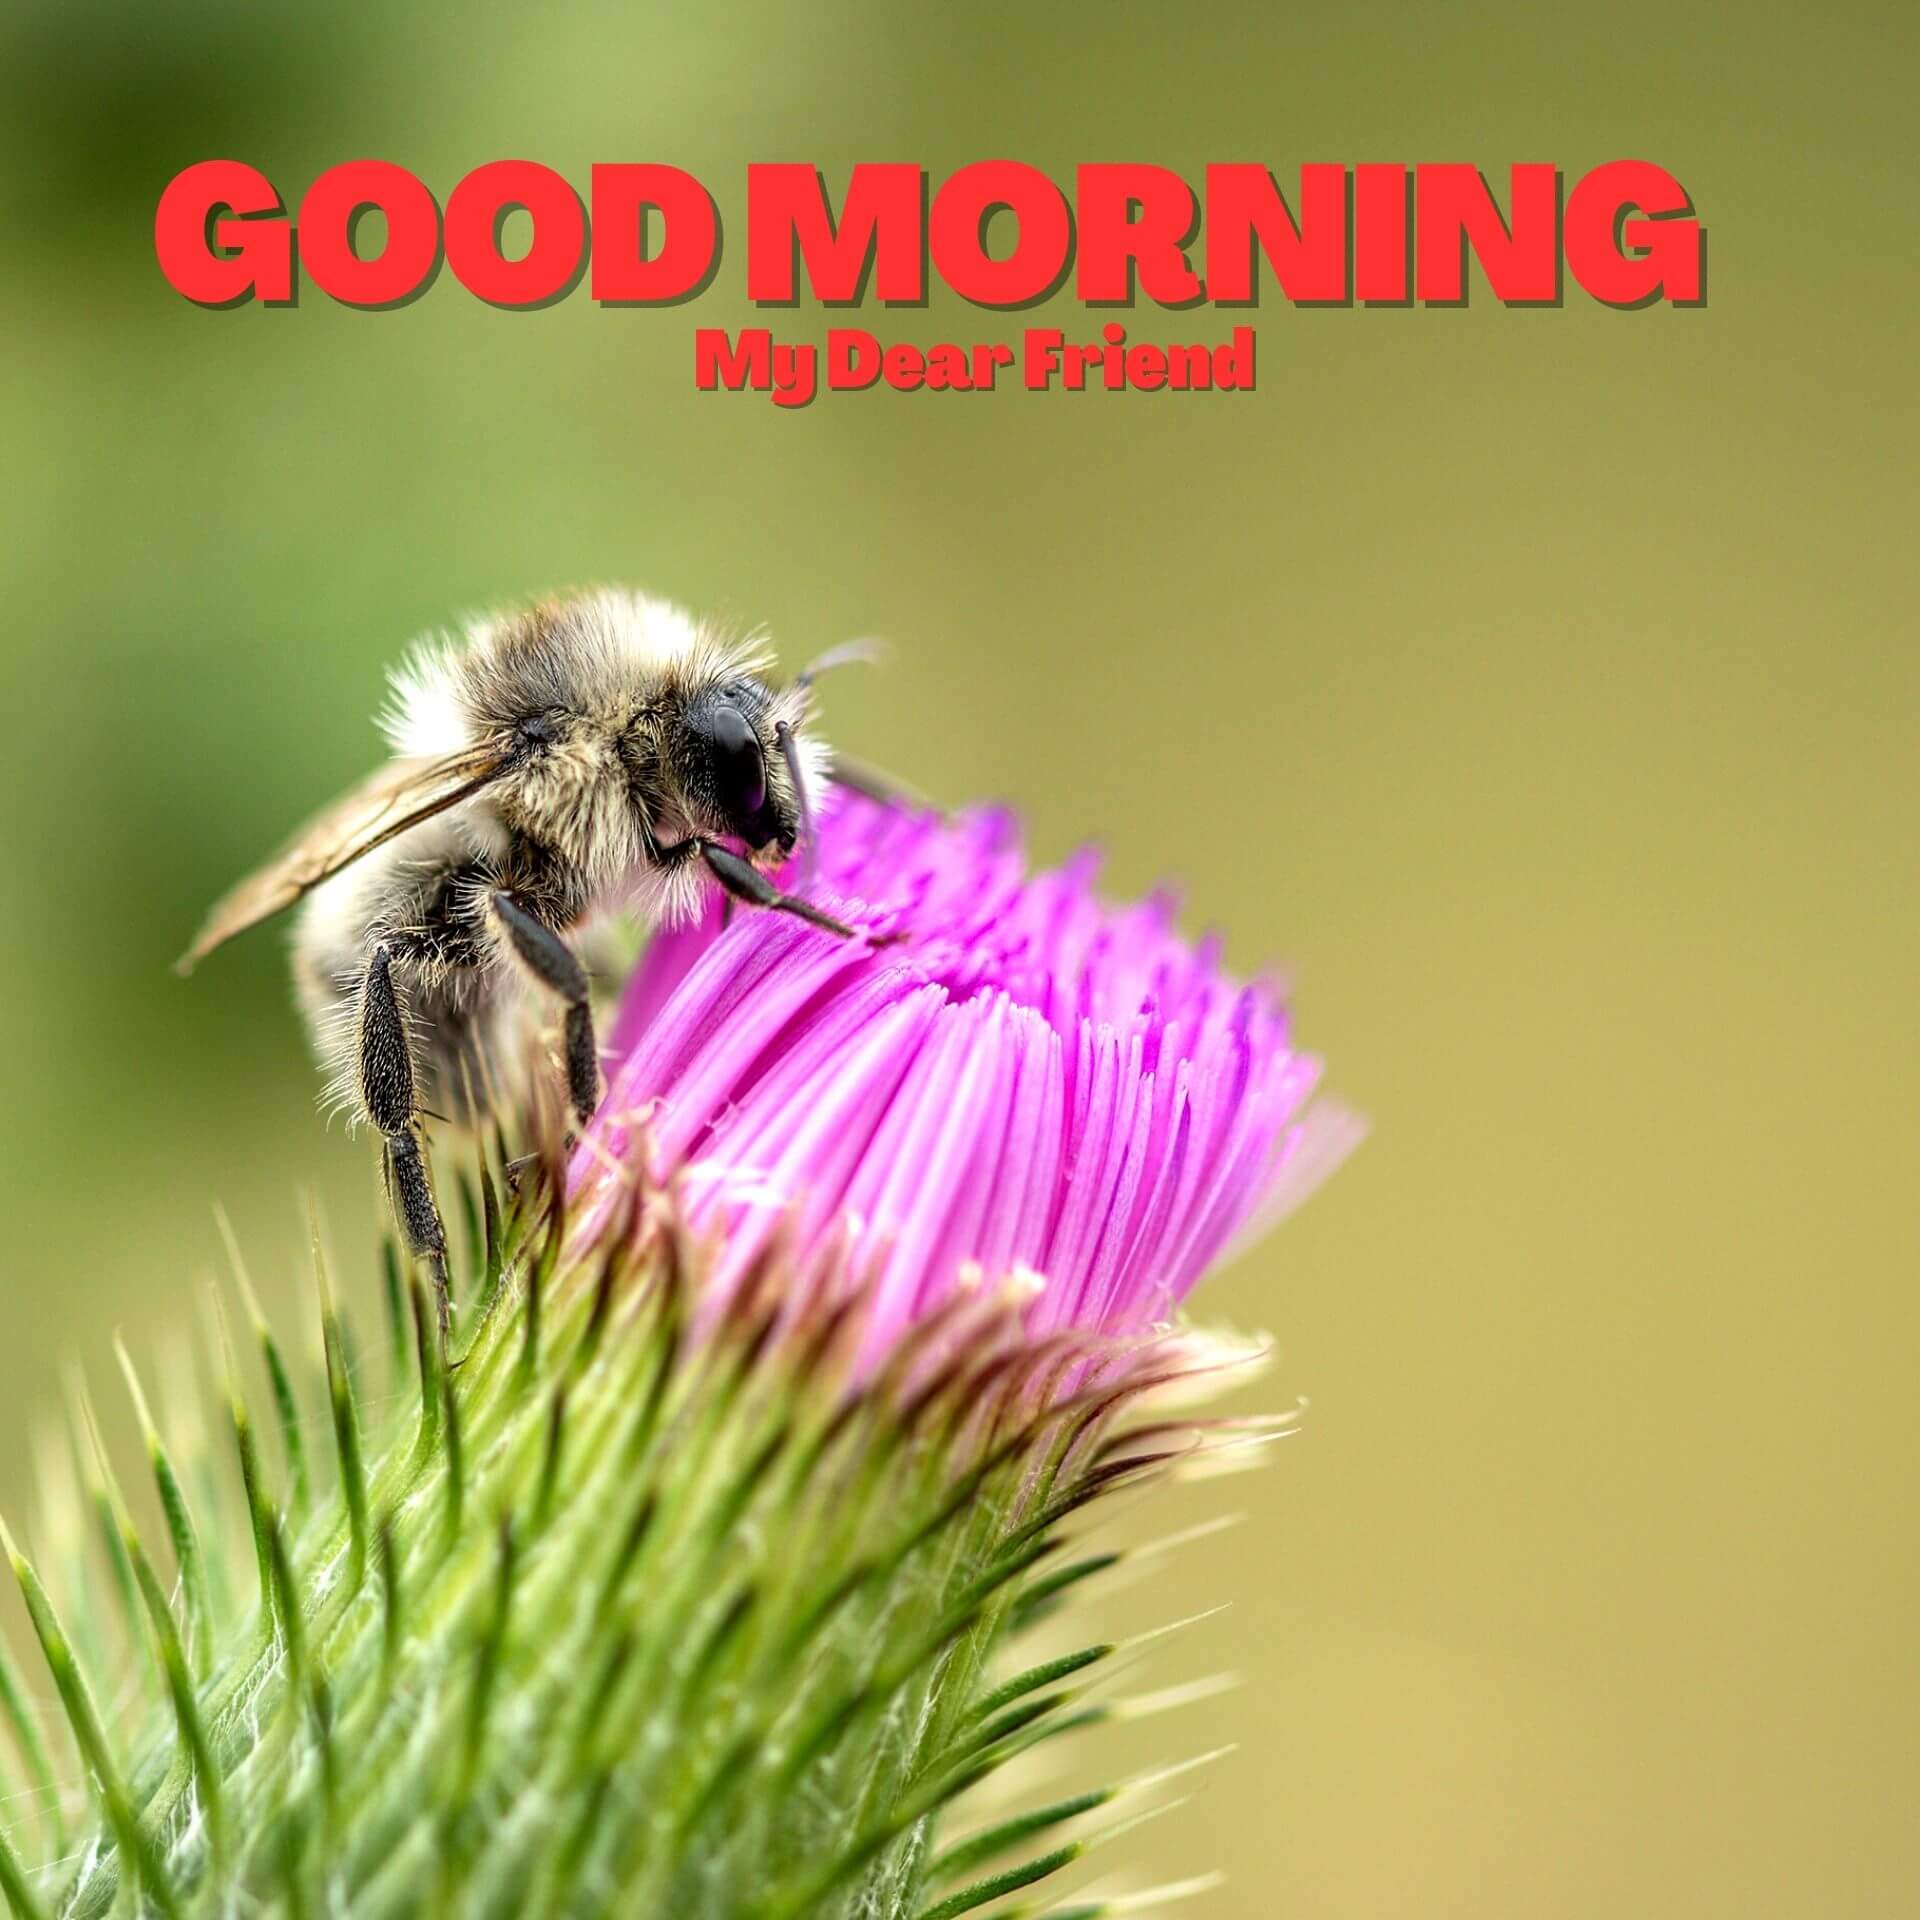 Animal Good morning Pics Download 1